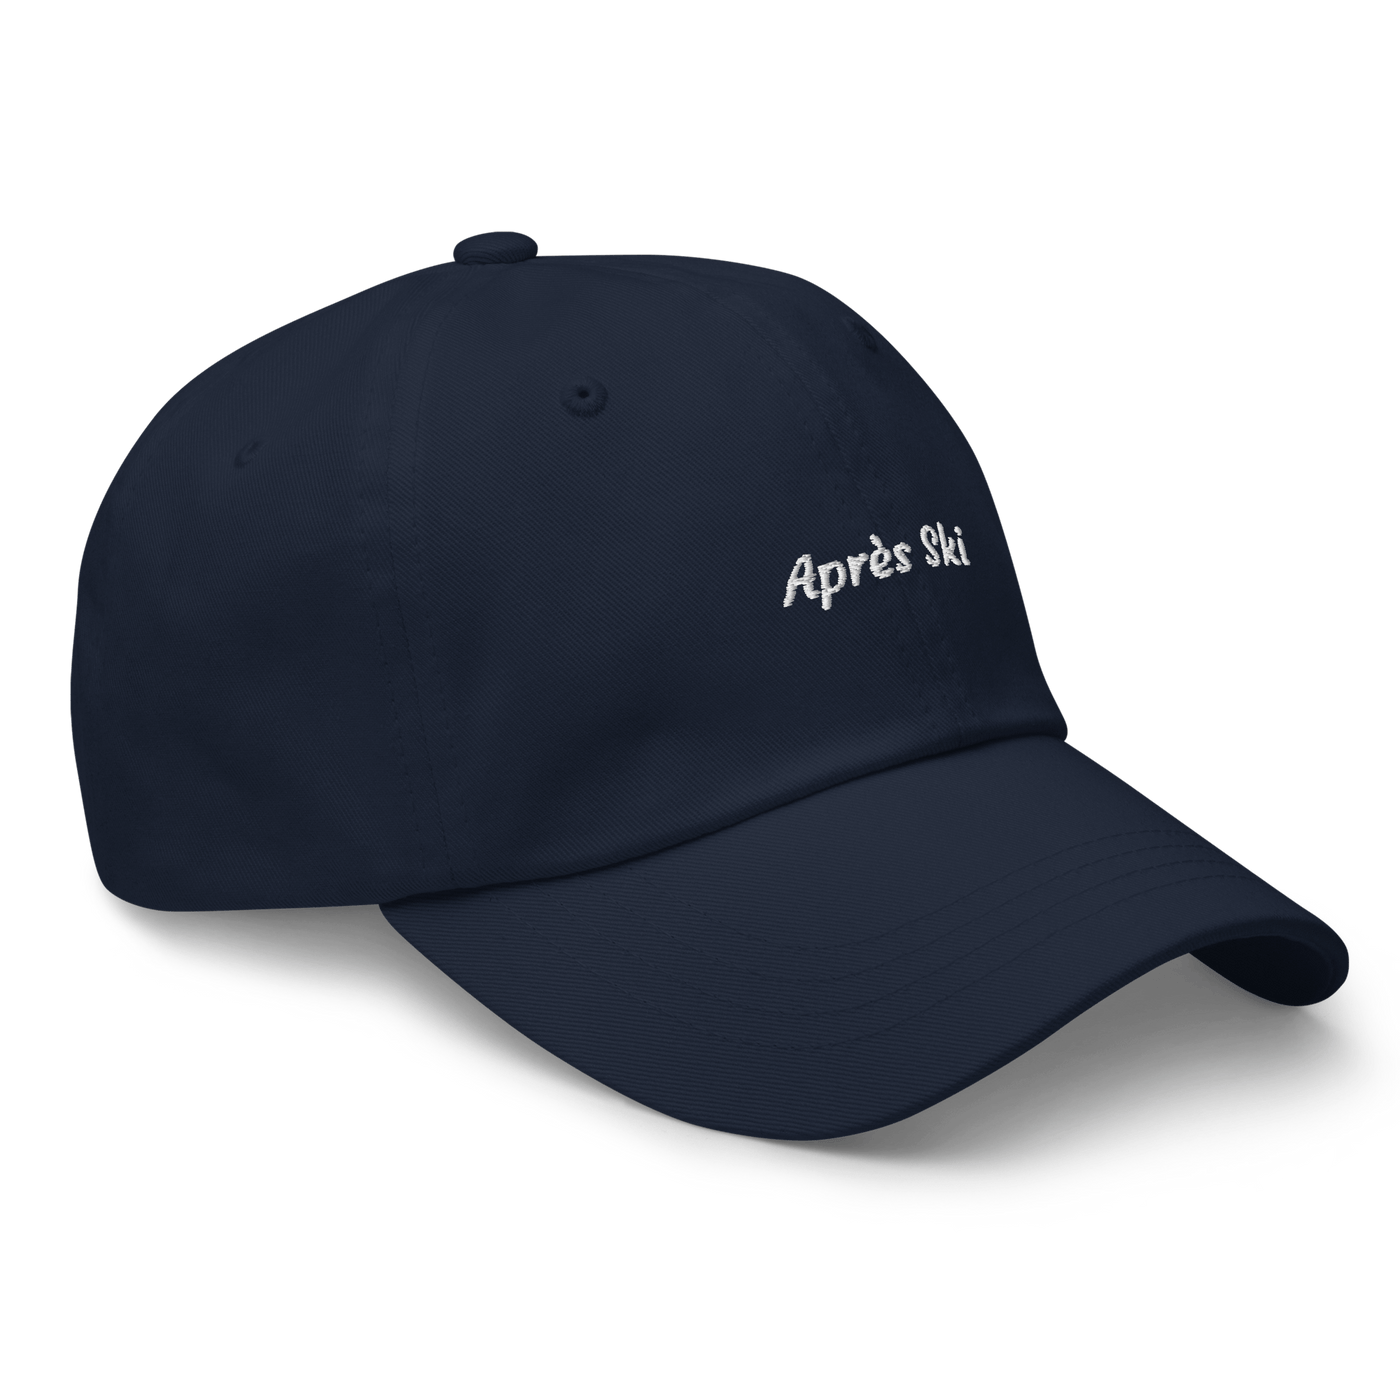 Après Ski Dad hat - Navy - - Just Another Cap Store